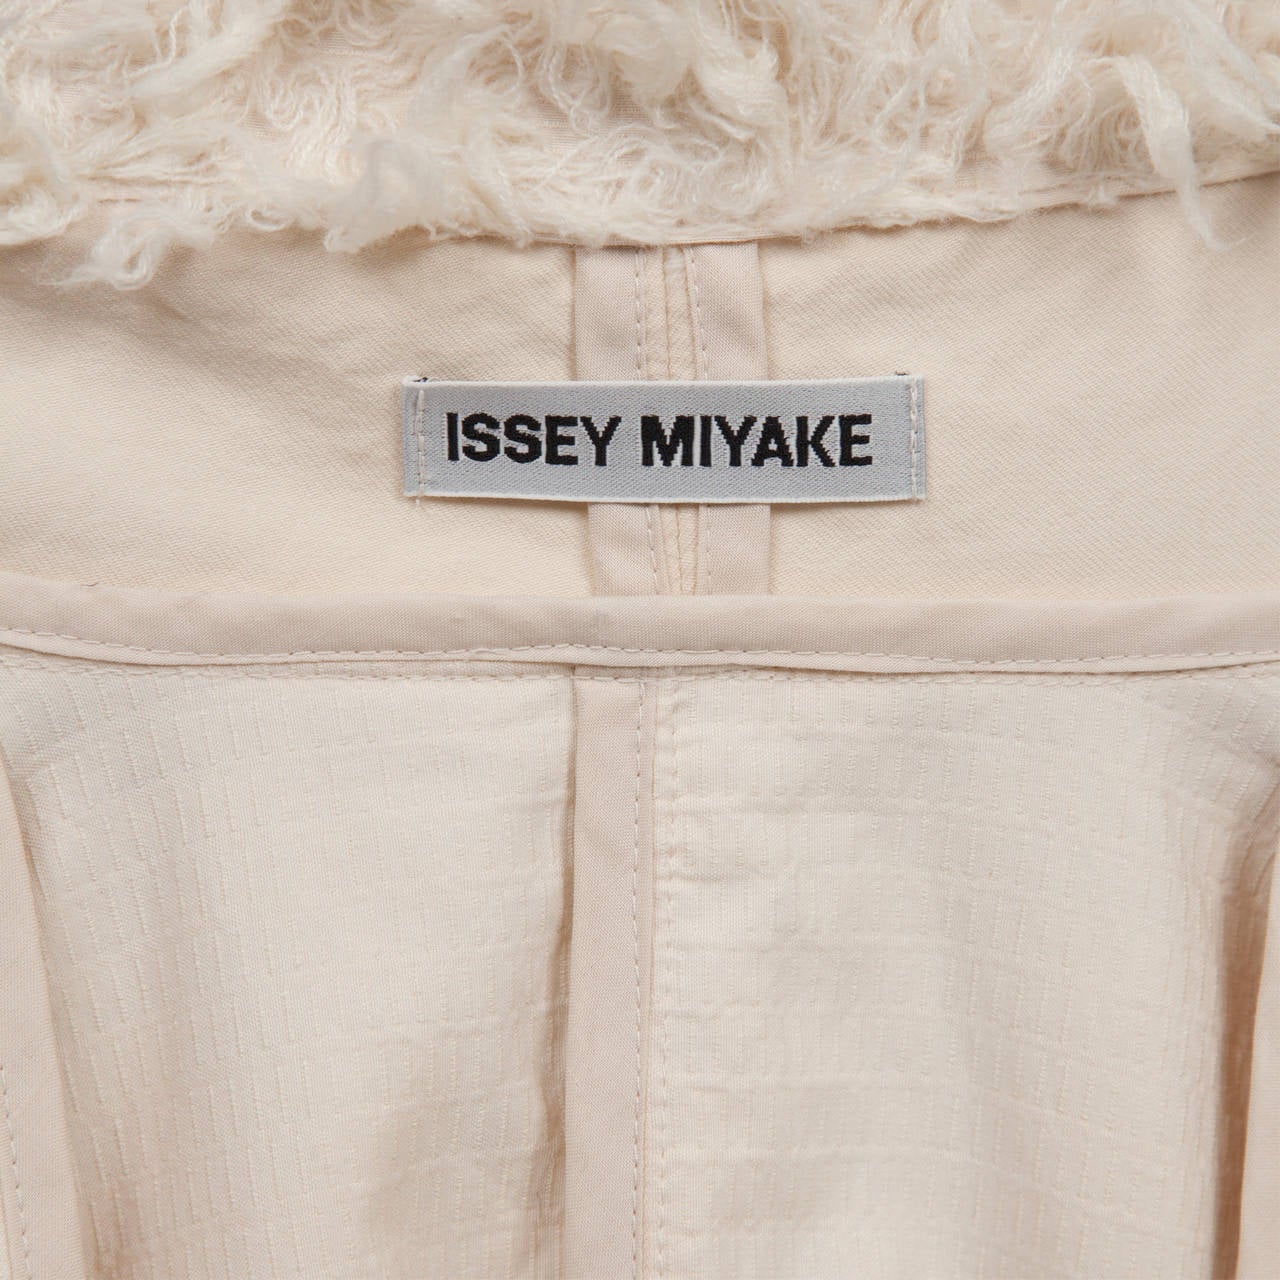 Issey Miyake White Cotton White Mohair Jacket Circa 1990s For Sale 3